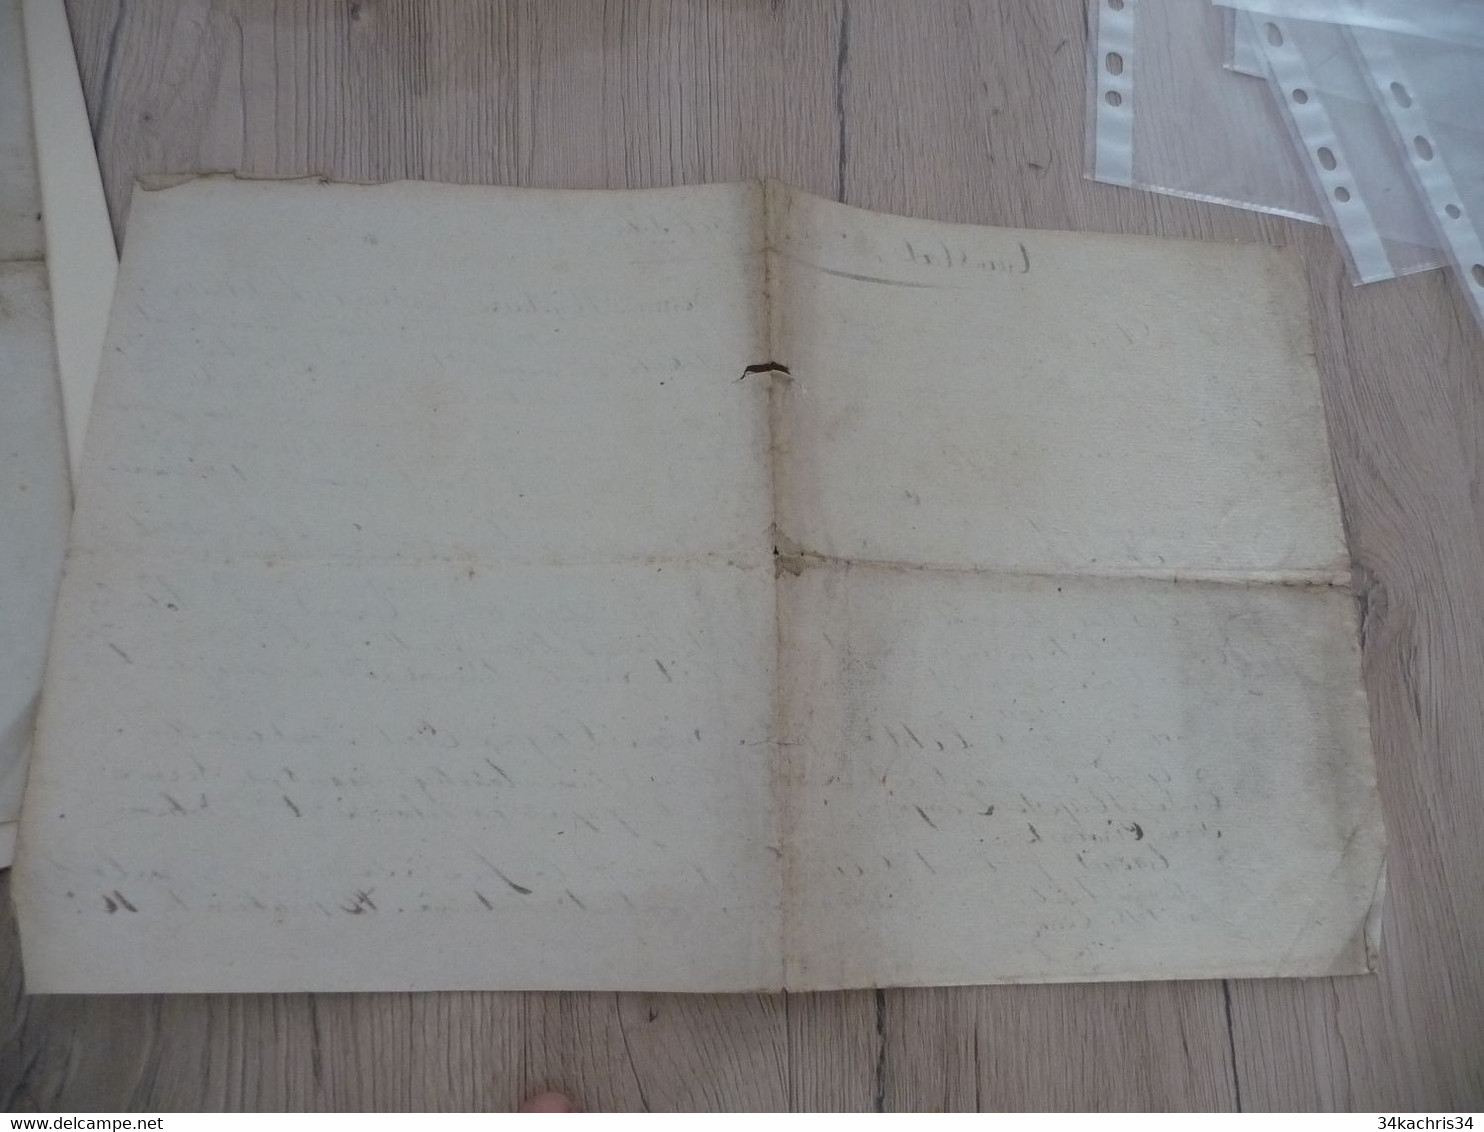 Haut Rhin Demande Pension + Congé Absolu Niedhard Régiment Dragons Price Rosenberg 1818 Autographes - Documents